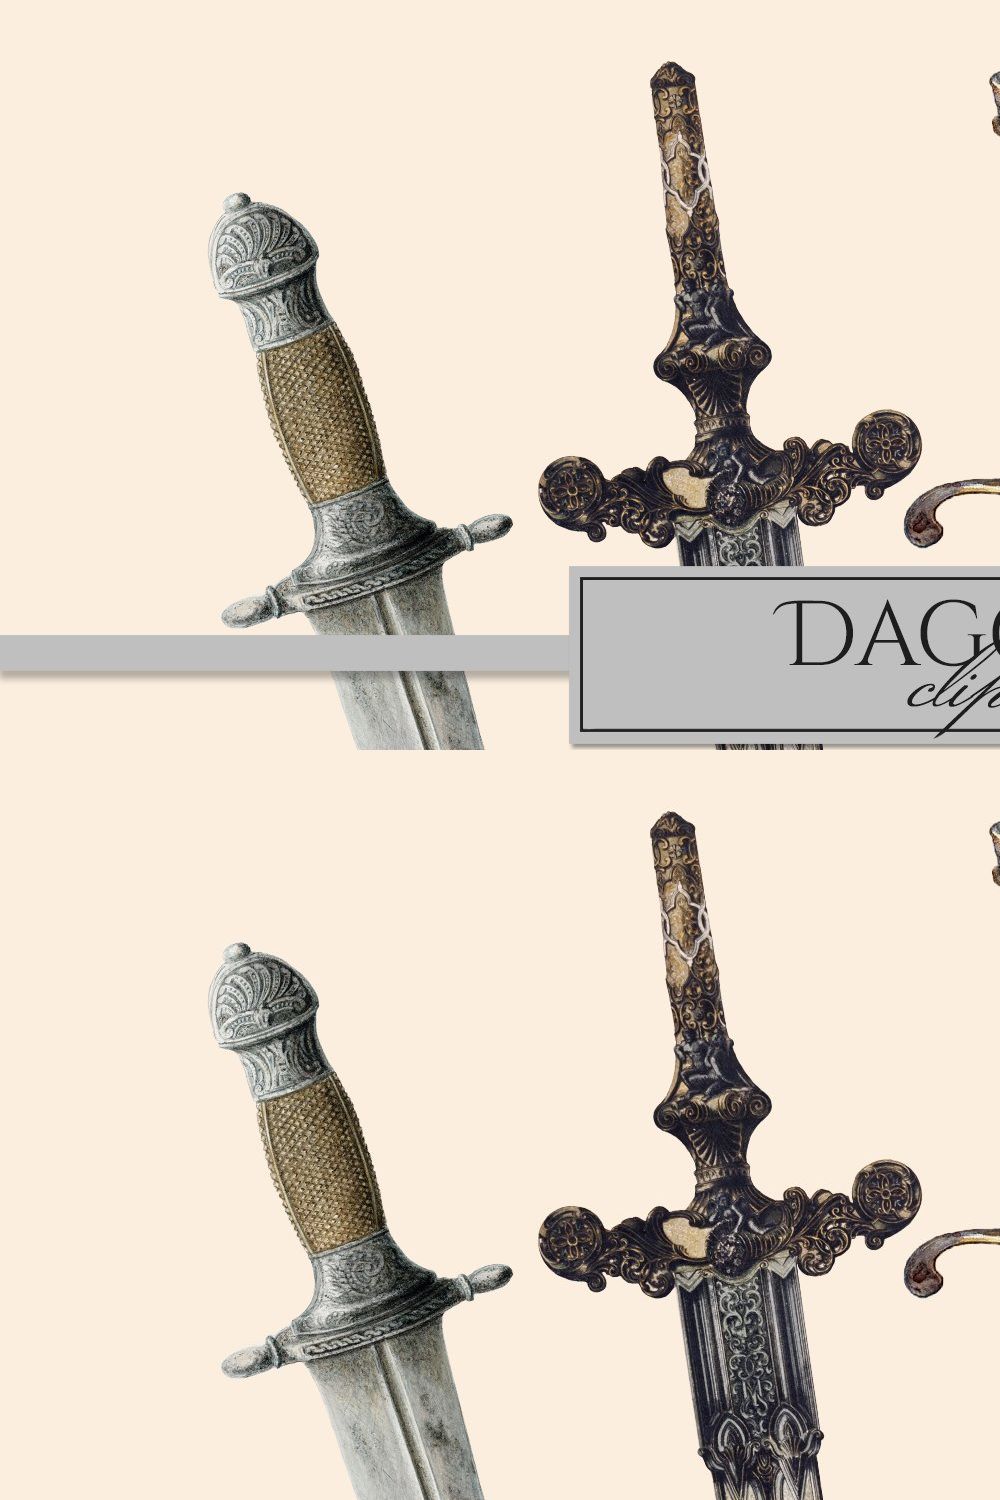 Vintage Daggers Clipart Illustration pinterest preview image.